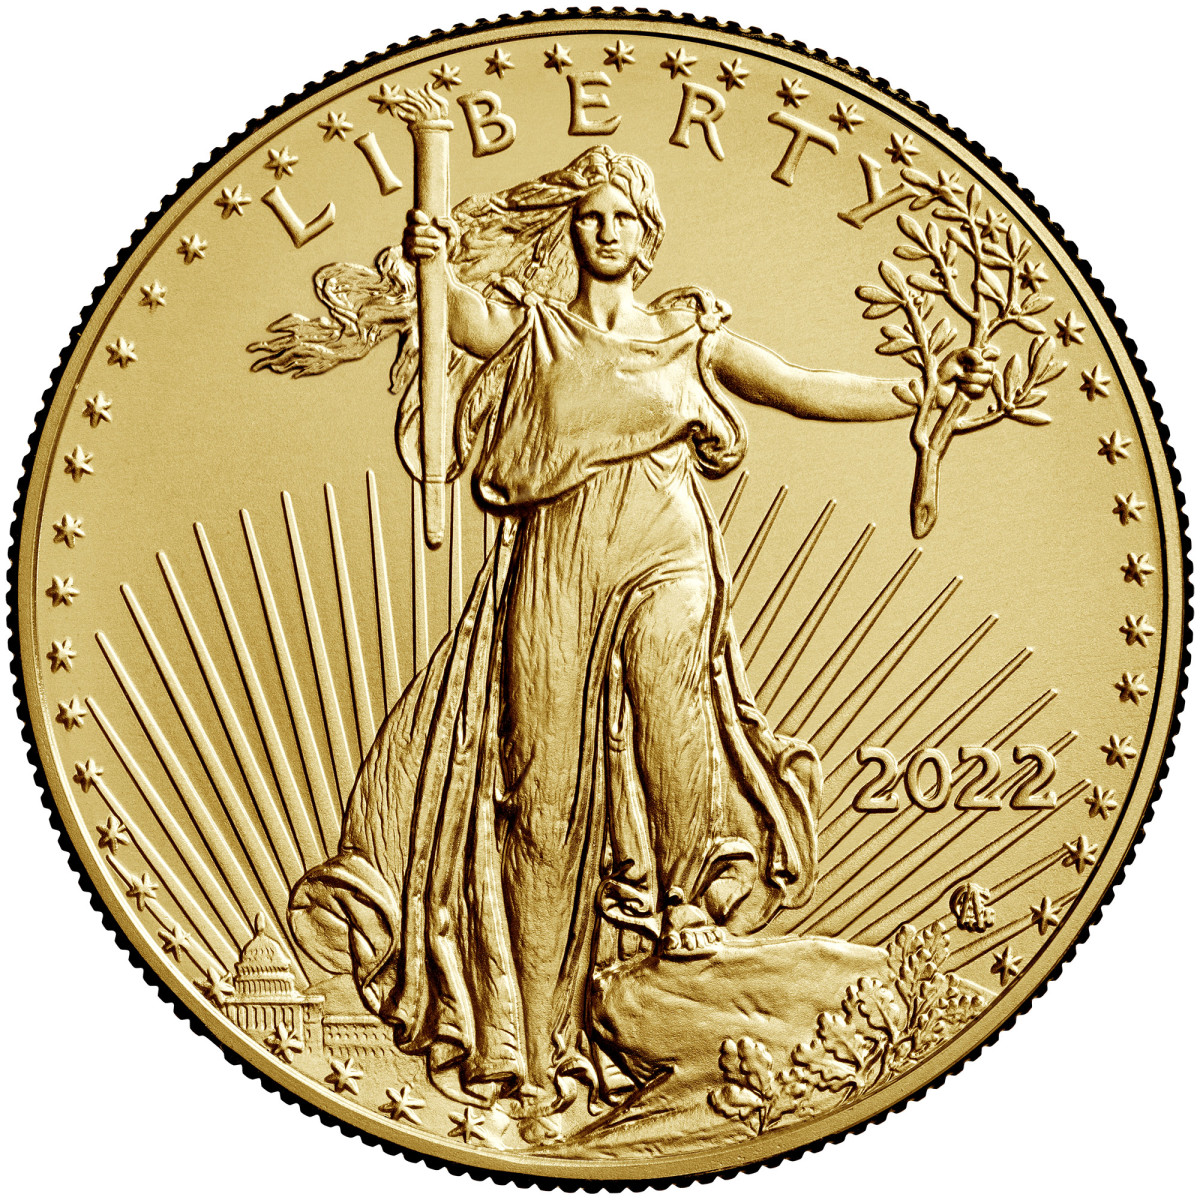 2022 American Eagle gold bullion coin. (Image courtesy United States Mint.)